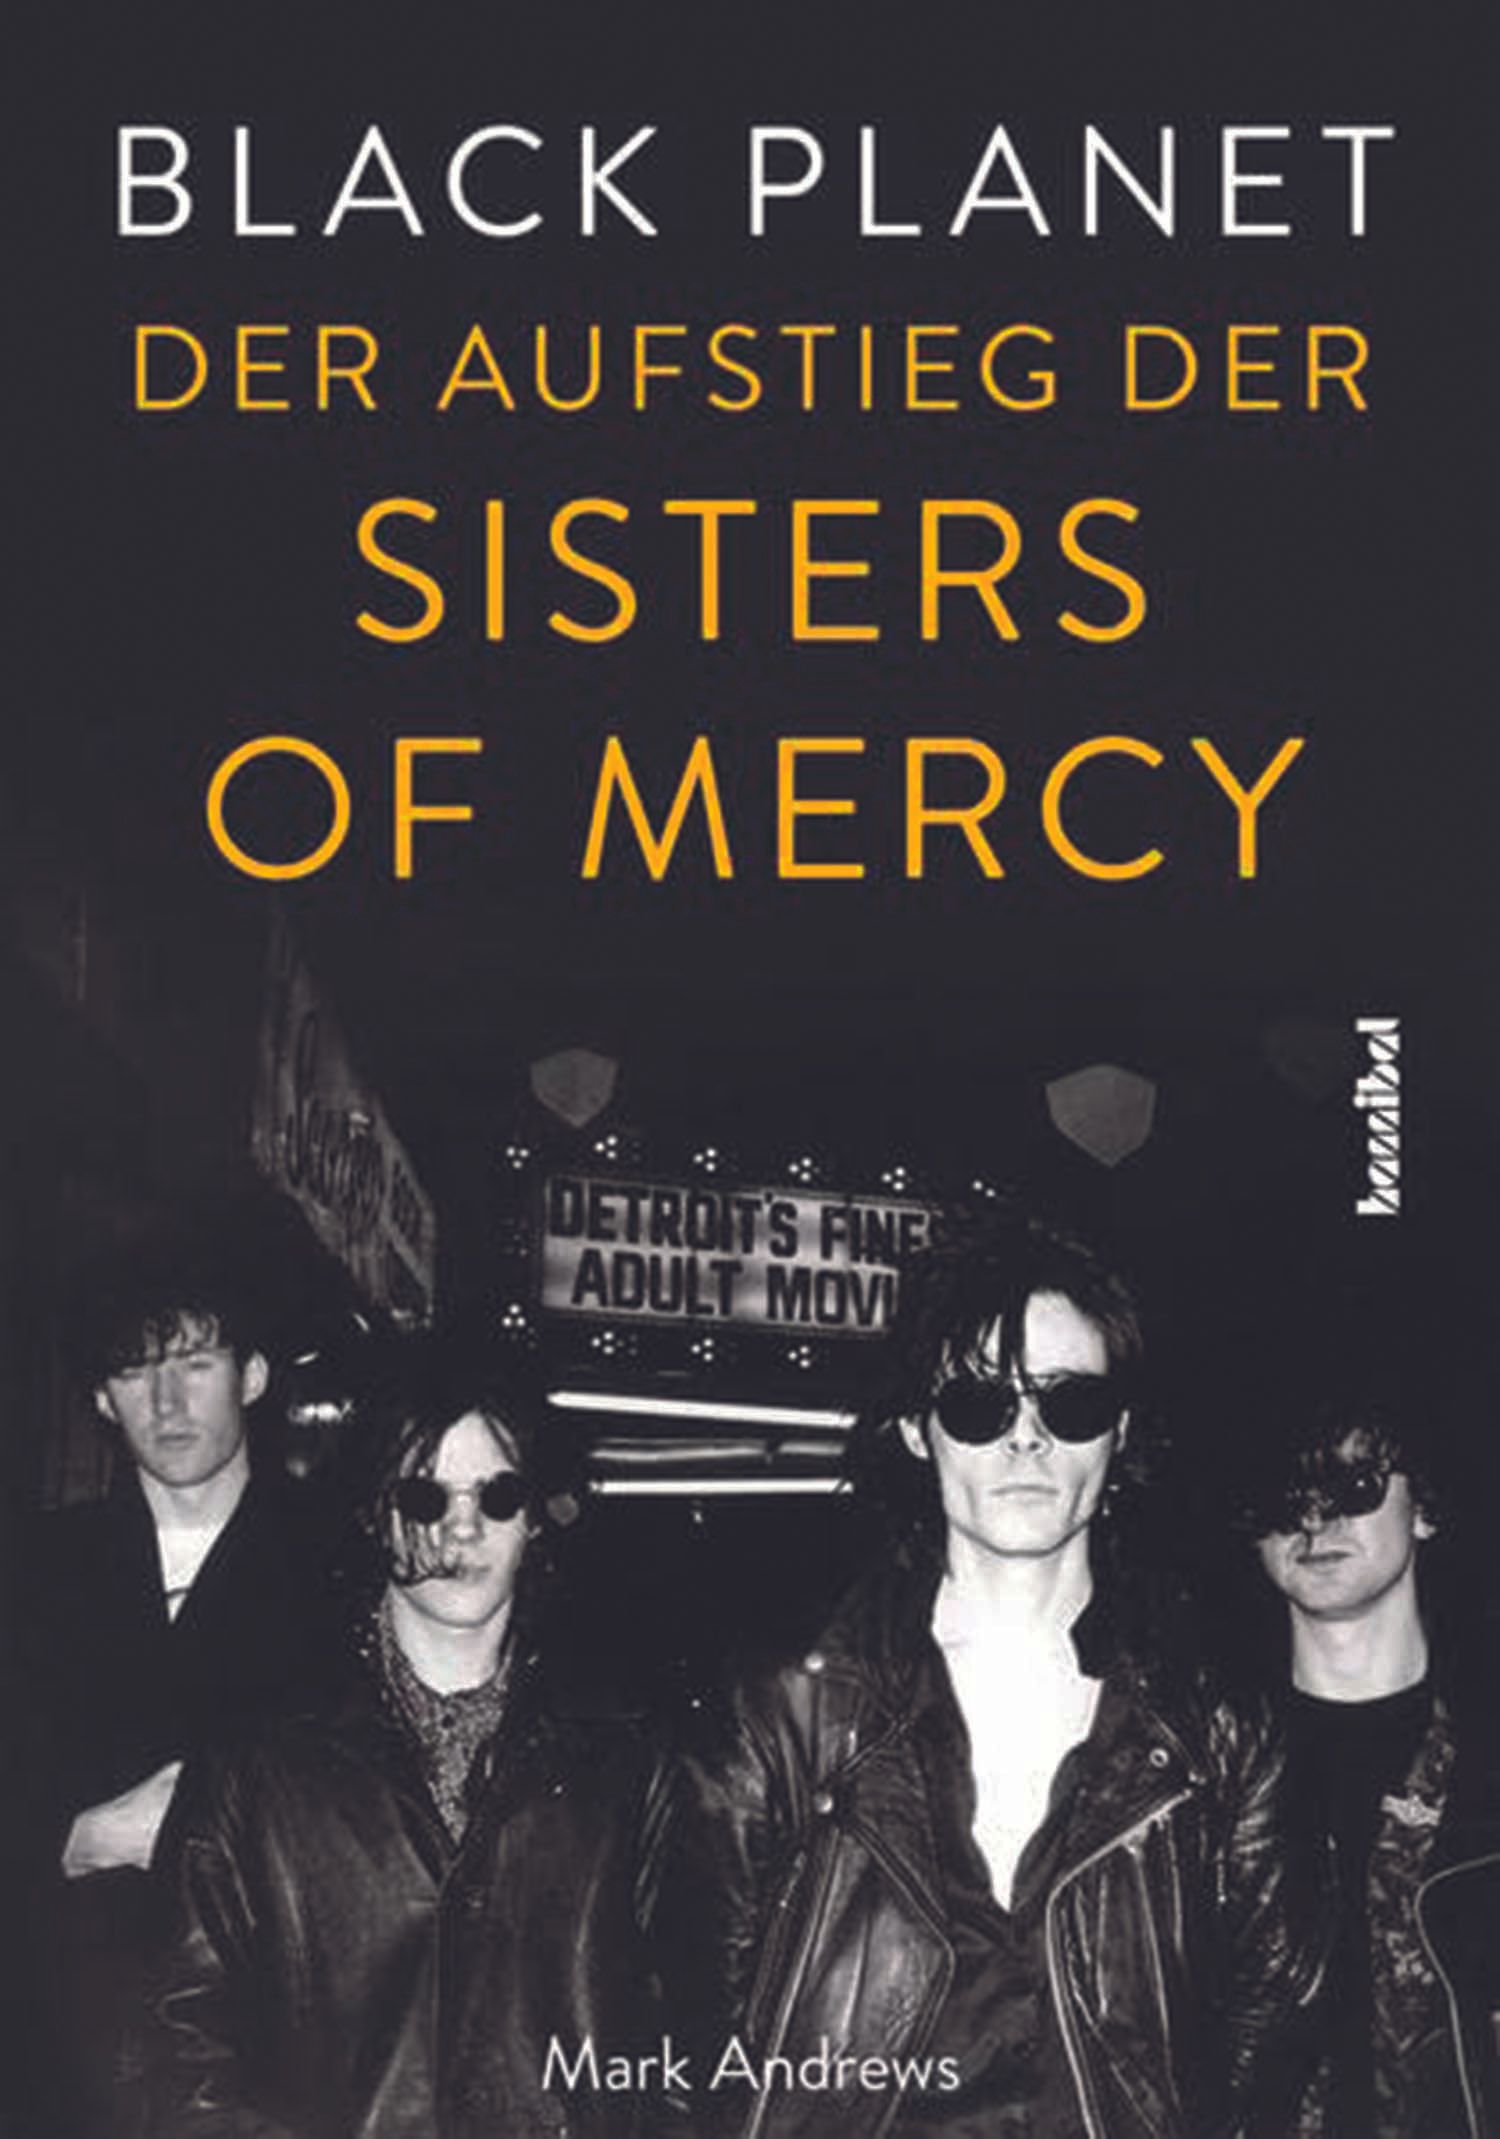 Sisters Of Mercy - Black Planet - Der Aufstieg der Sisters Of Mercy